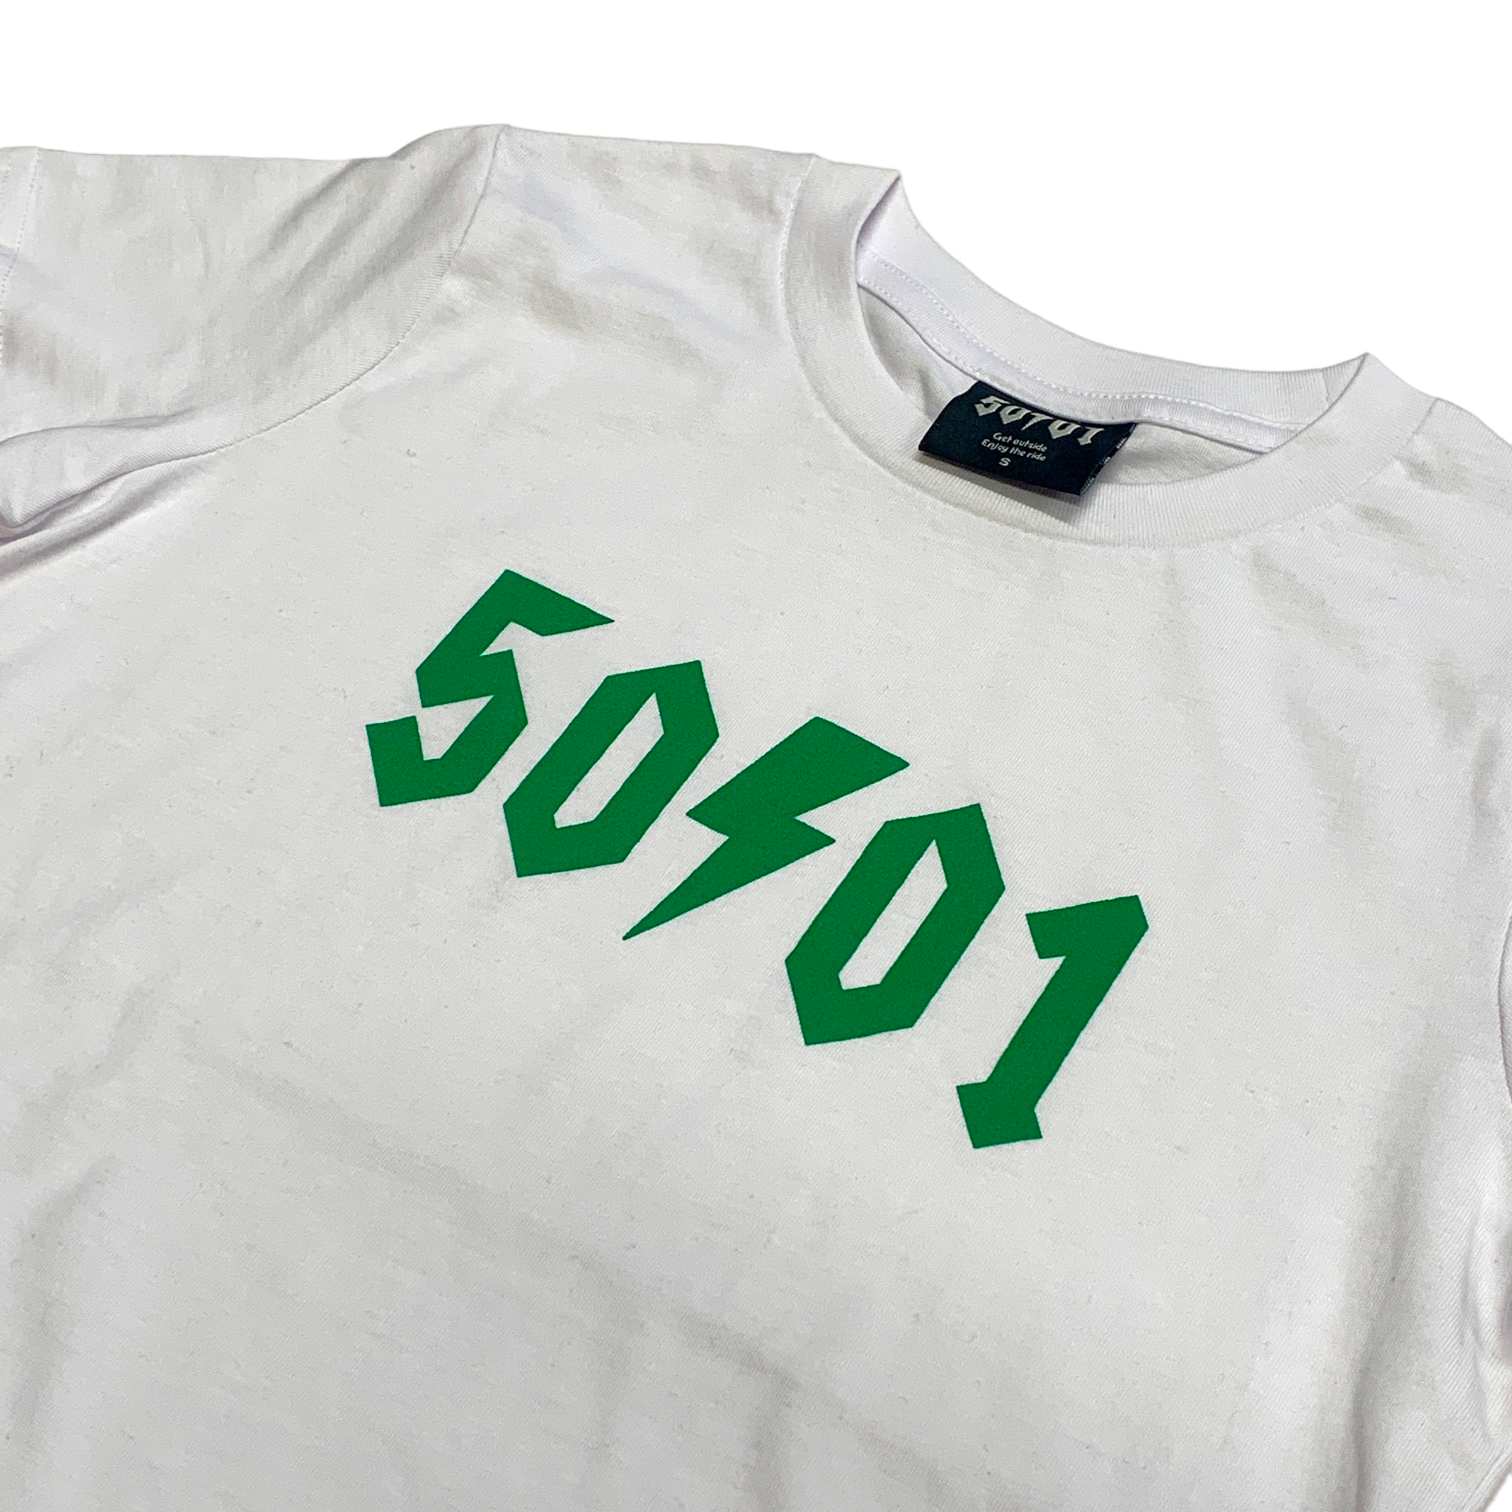 50to01 YOUTH - LOGO T-SHIRT WHITE / GREEN